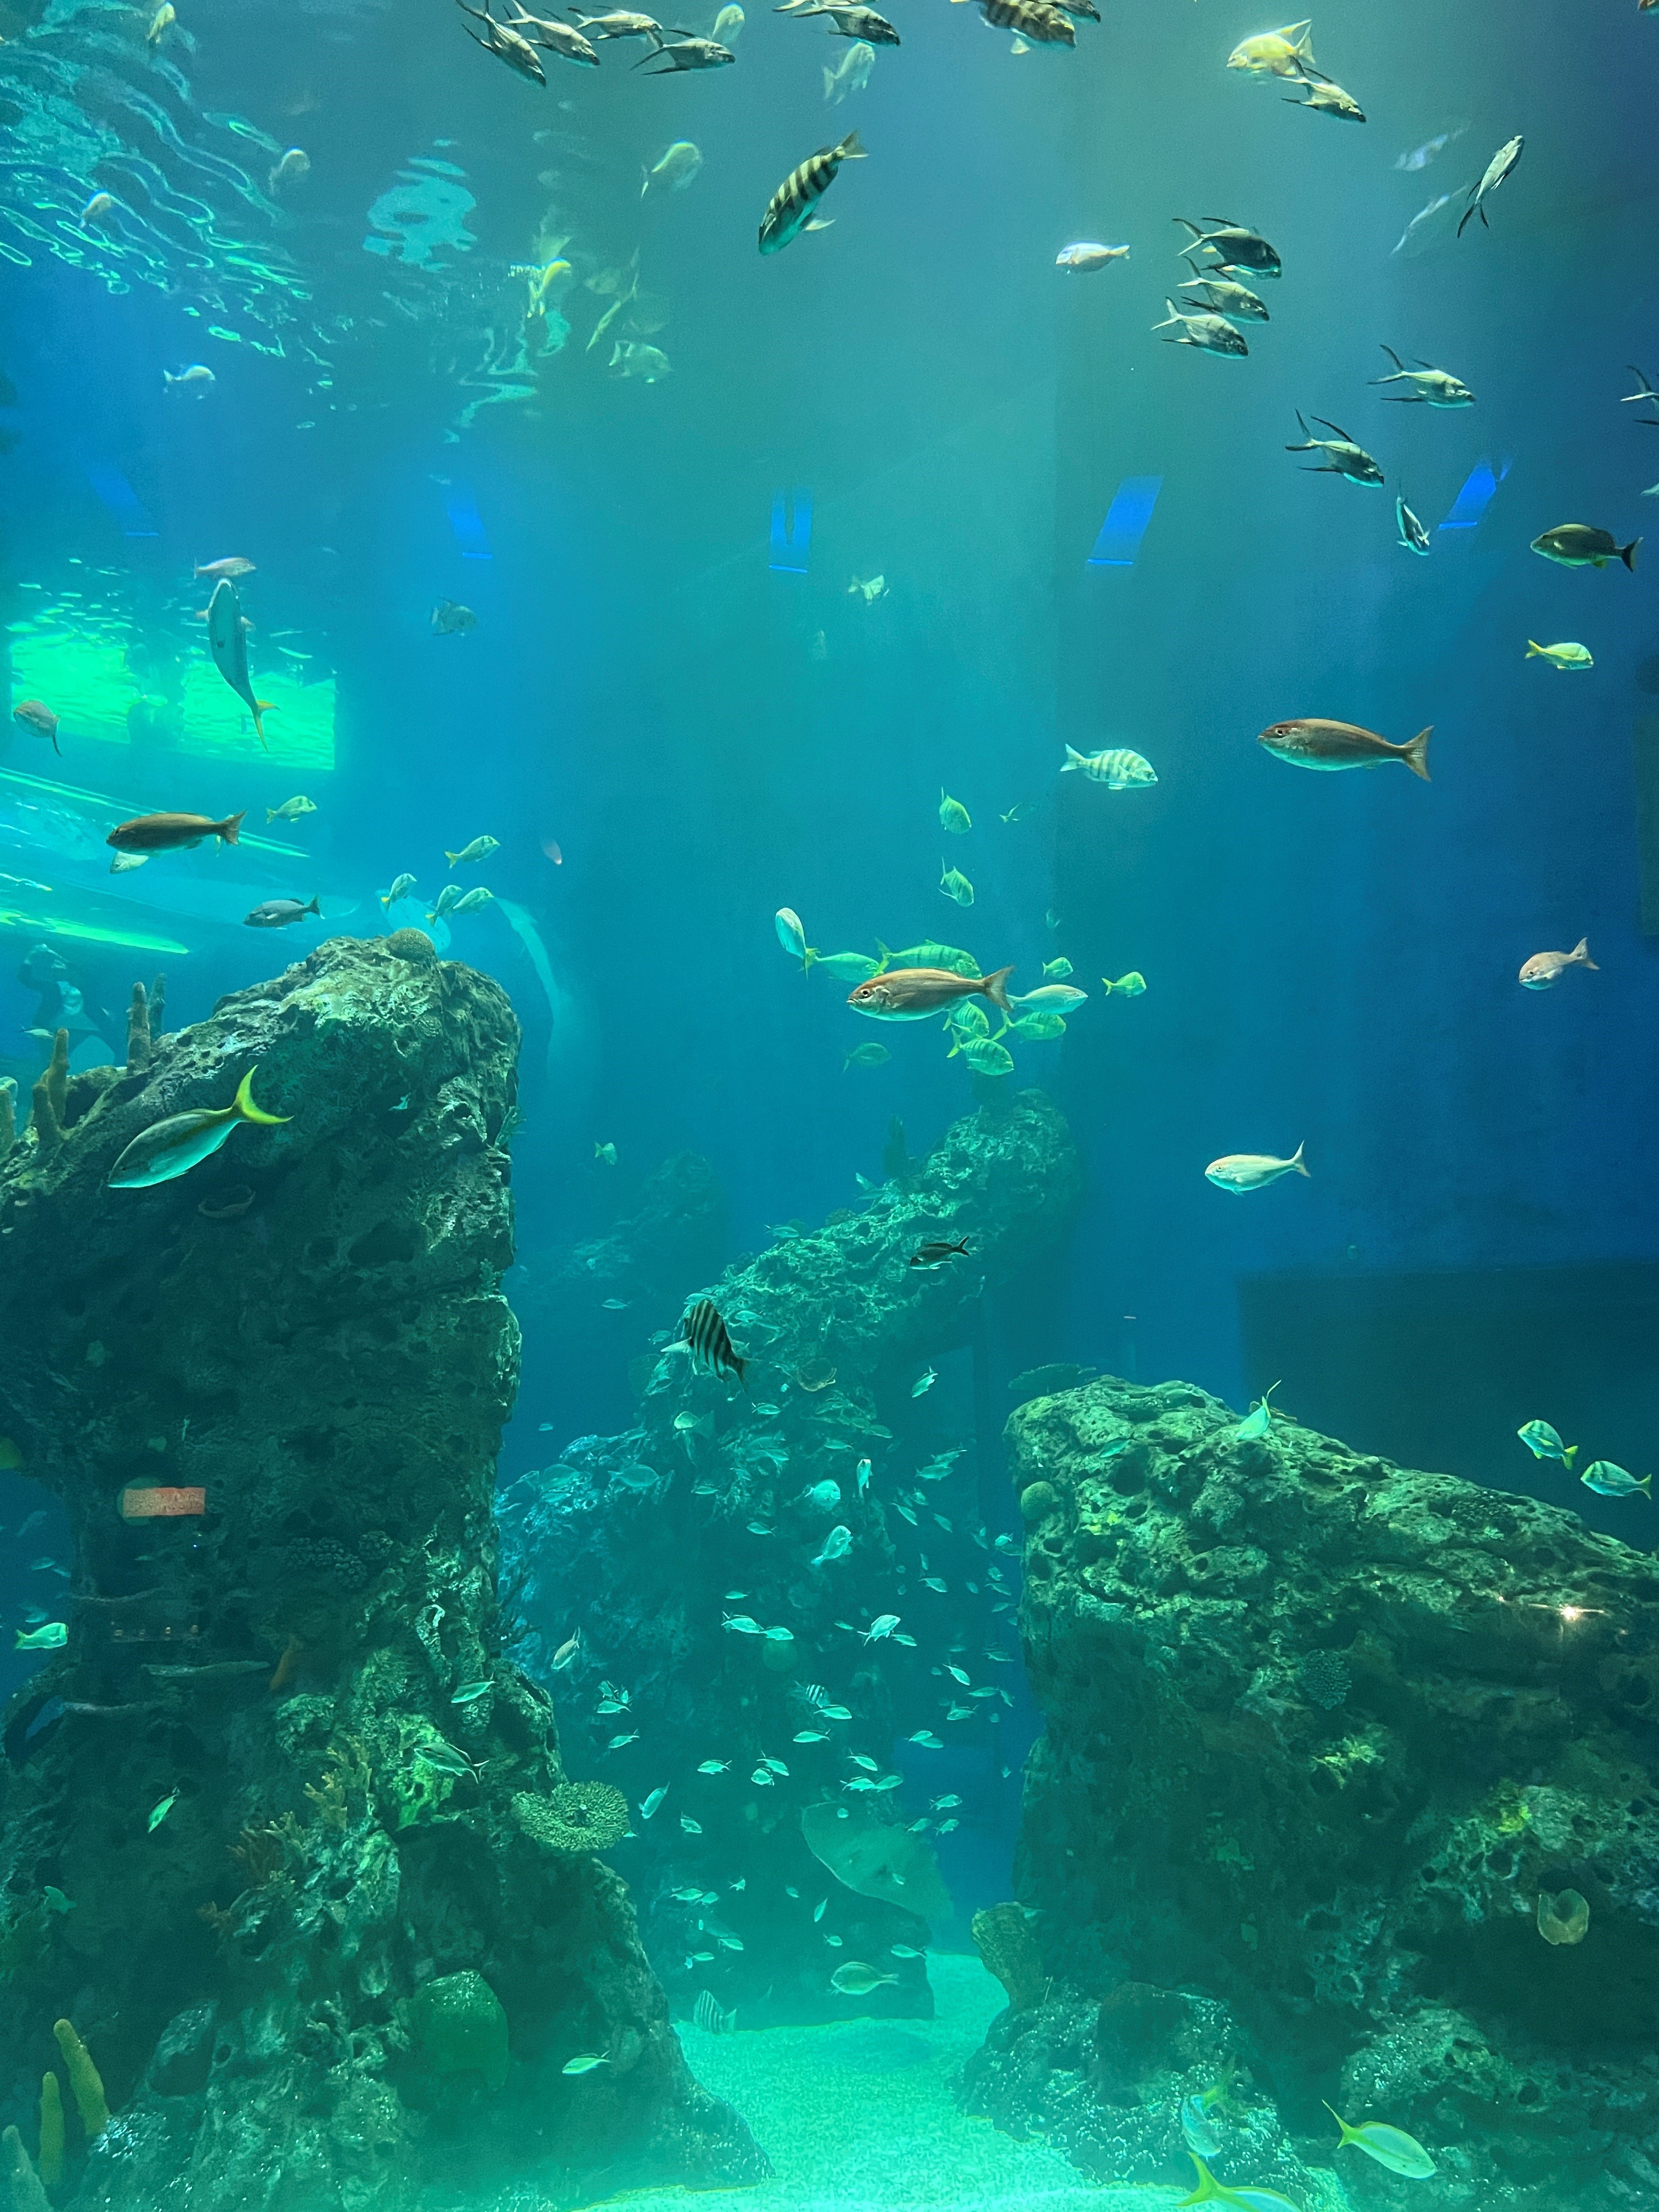 Gulf of Mexico fish tank